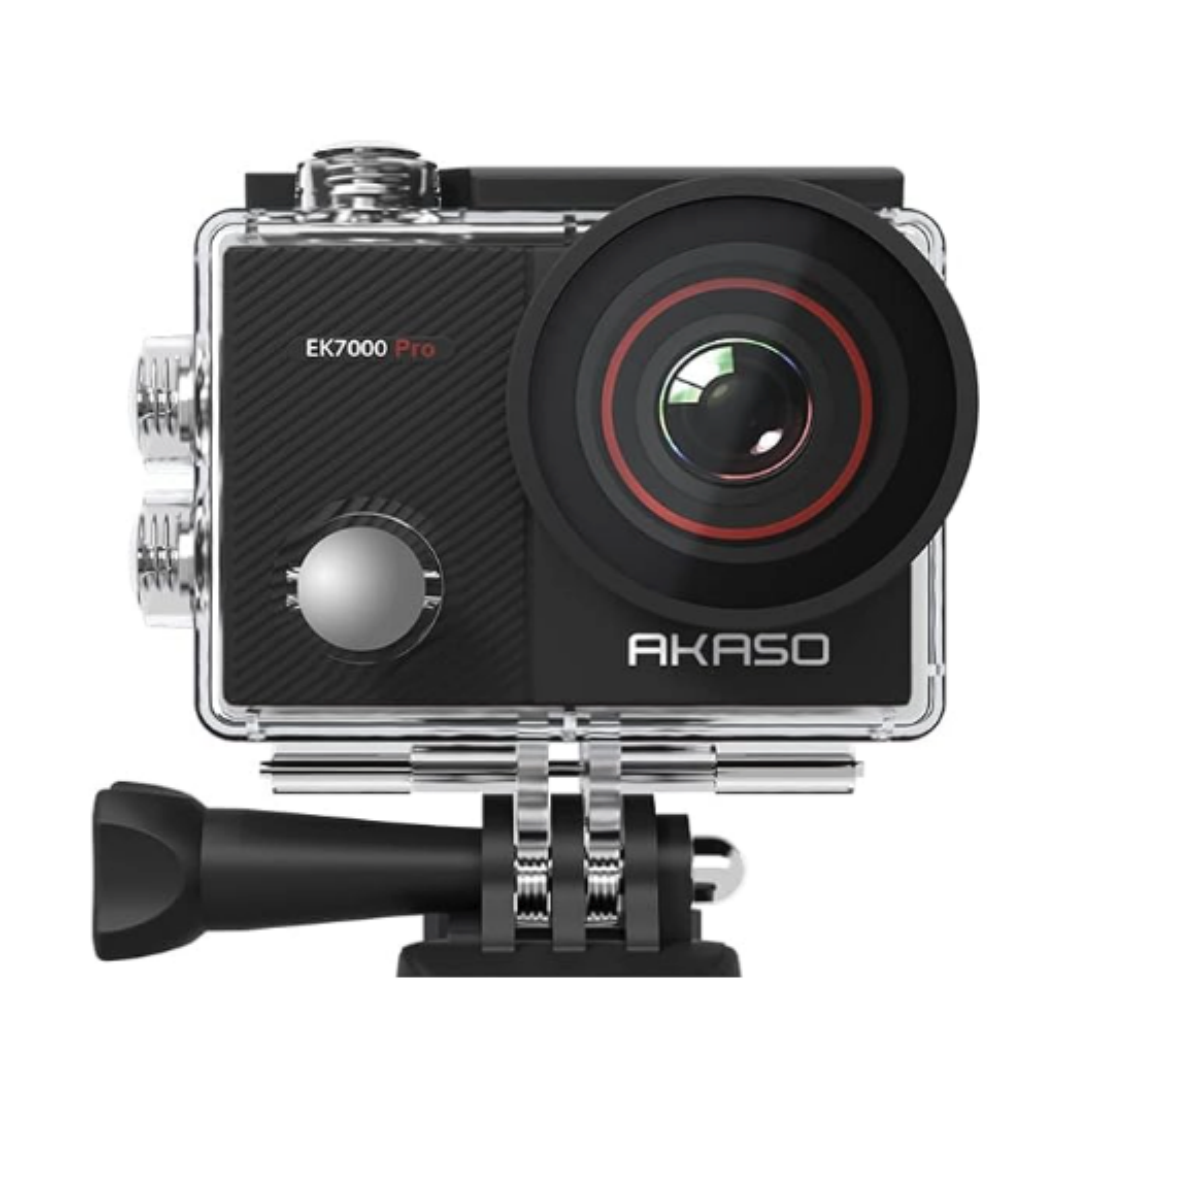 An AKASO EK7000 Pro action camera